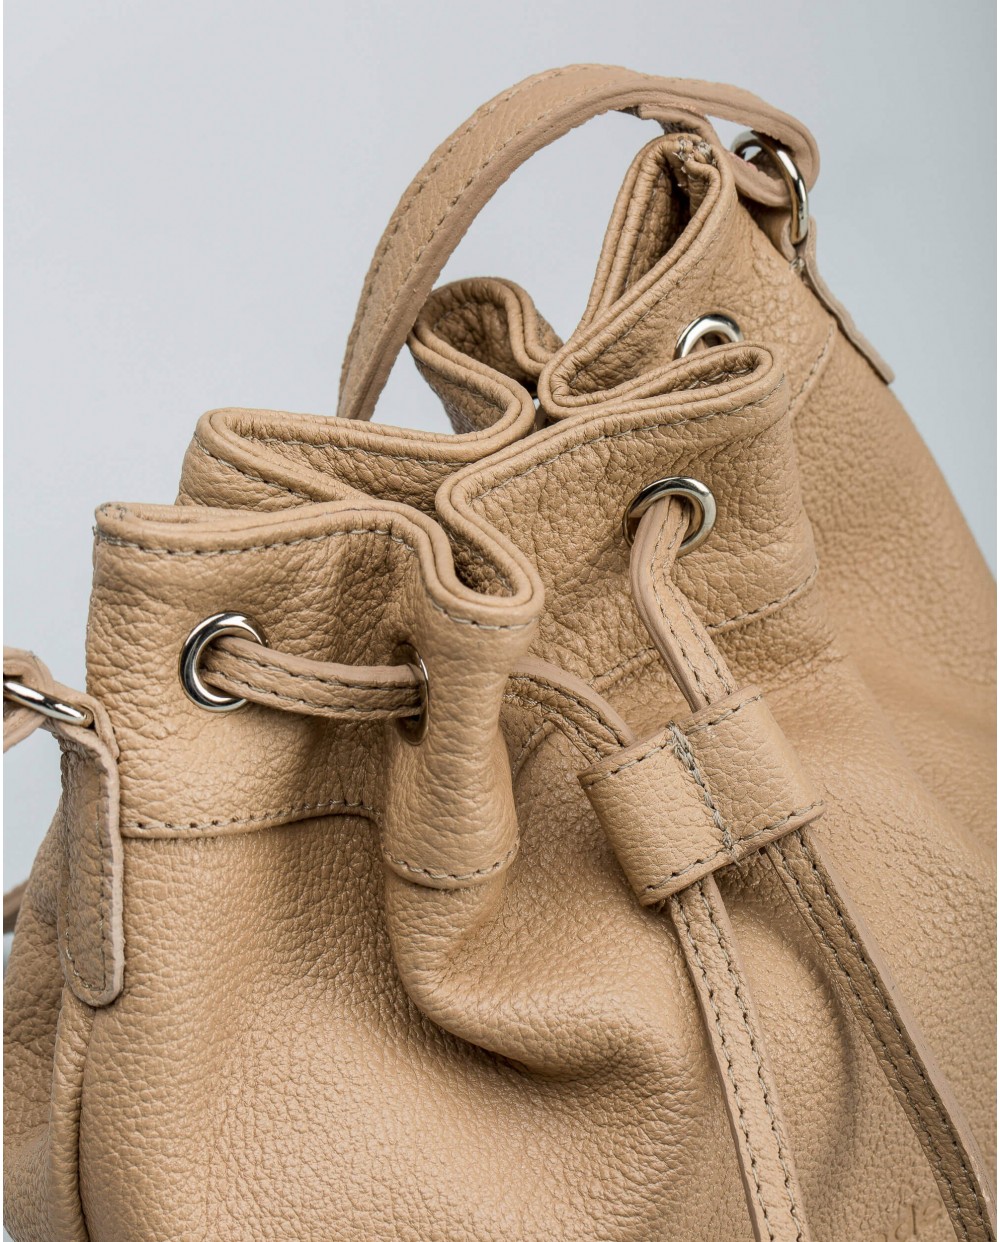 Wonders-Outlet-Sack style leather handbag